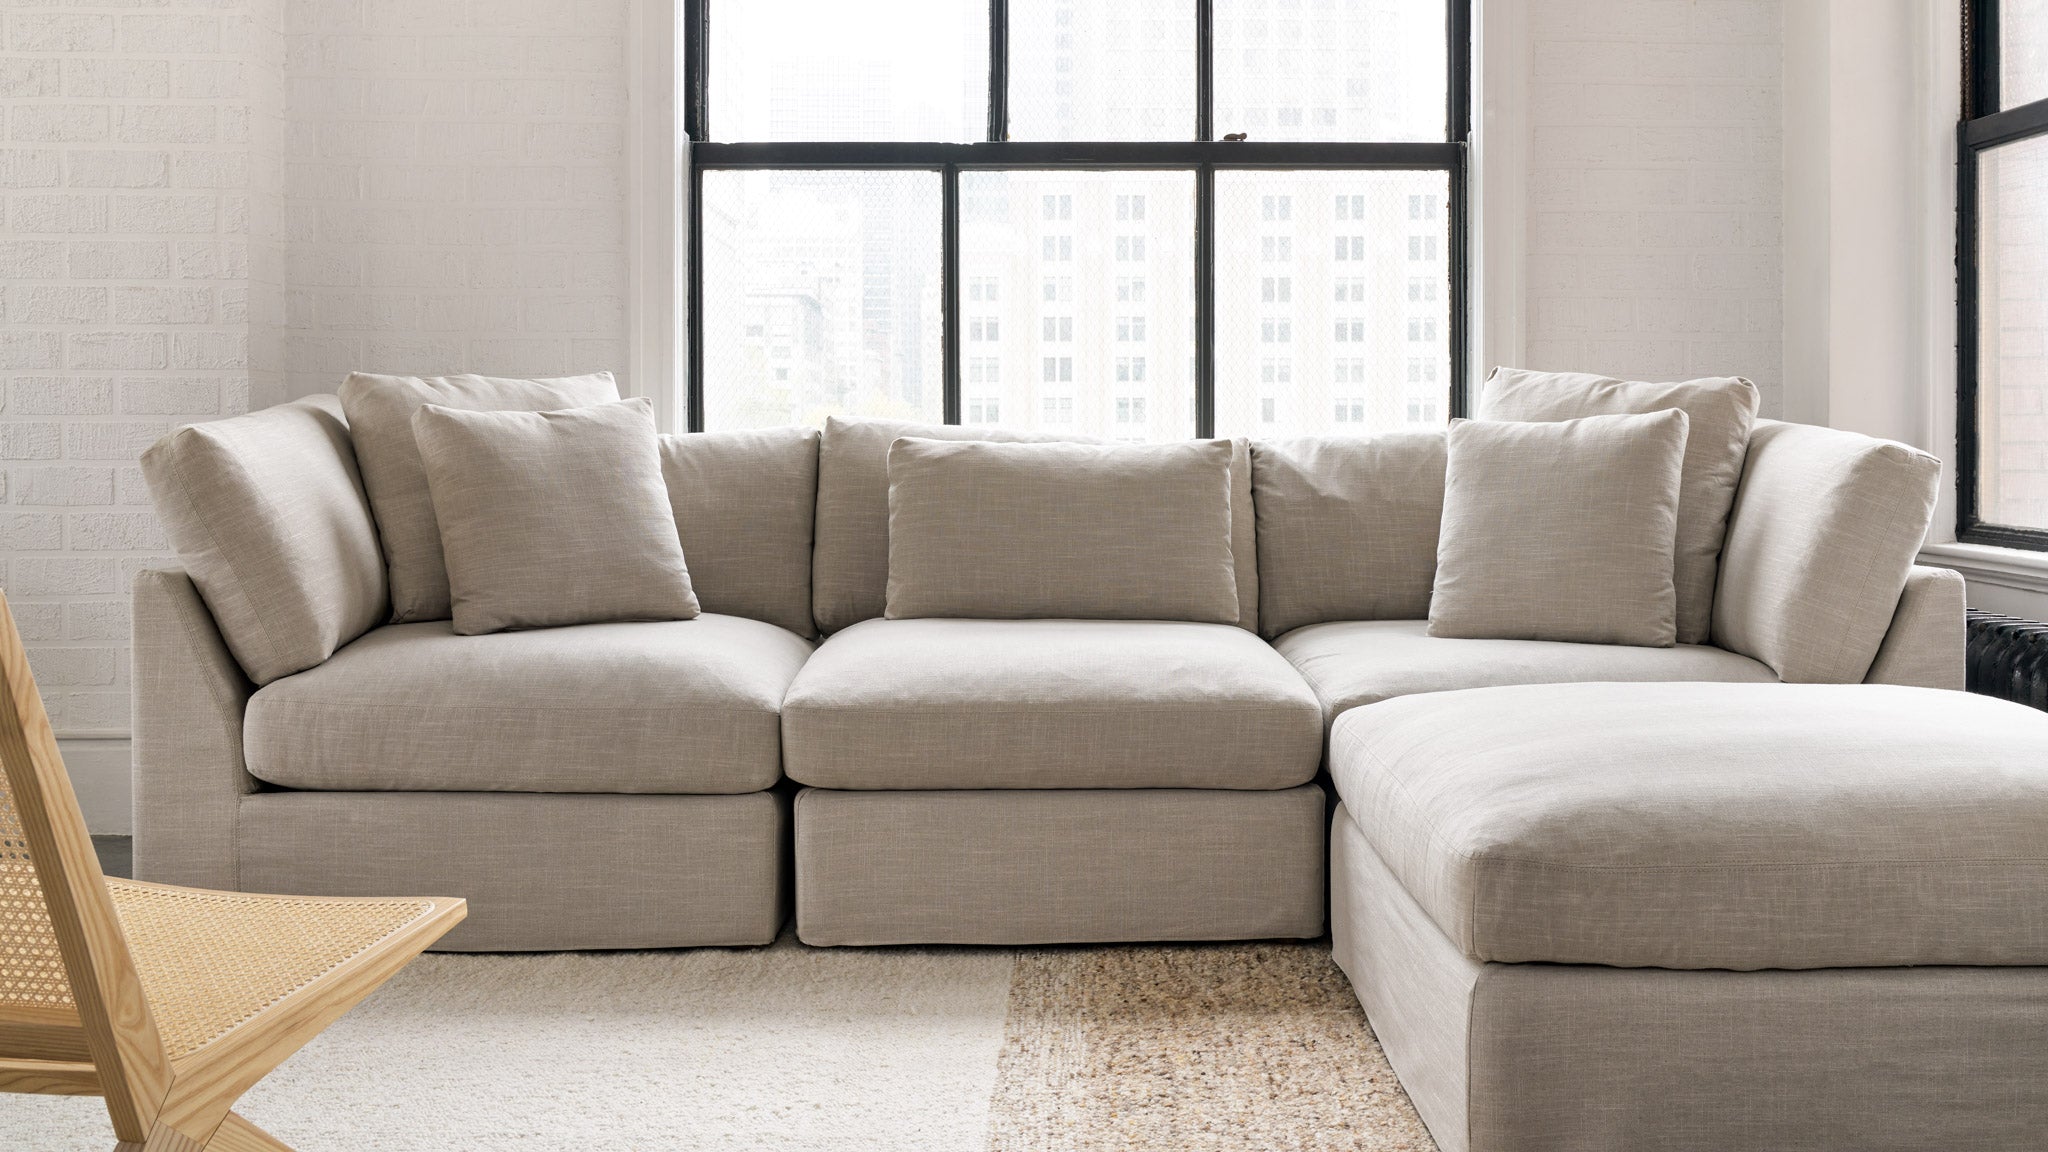 Get Together™ 2-Piece Modular Sofa, Standard, Light Pebble - Image 6